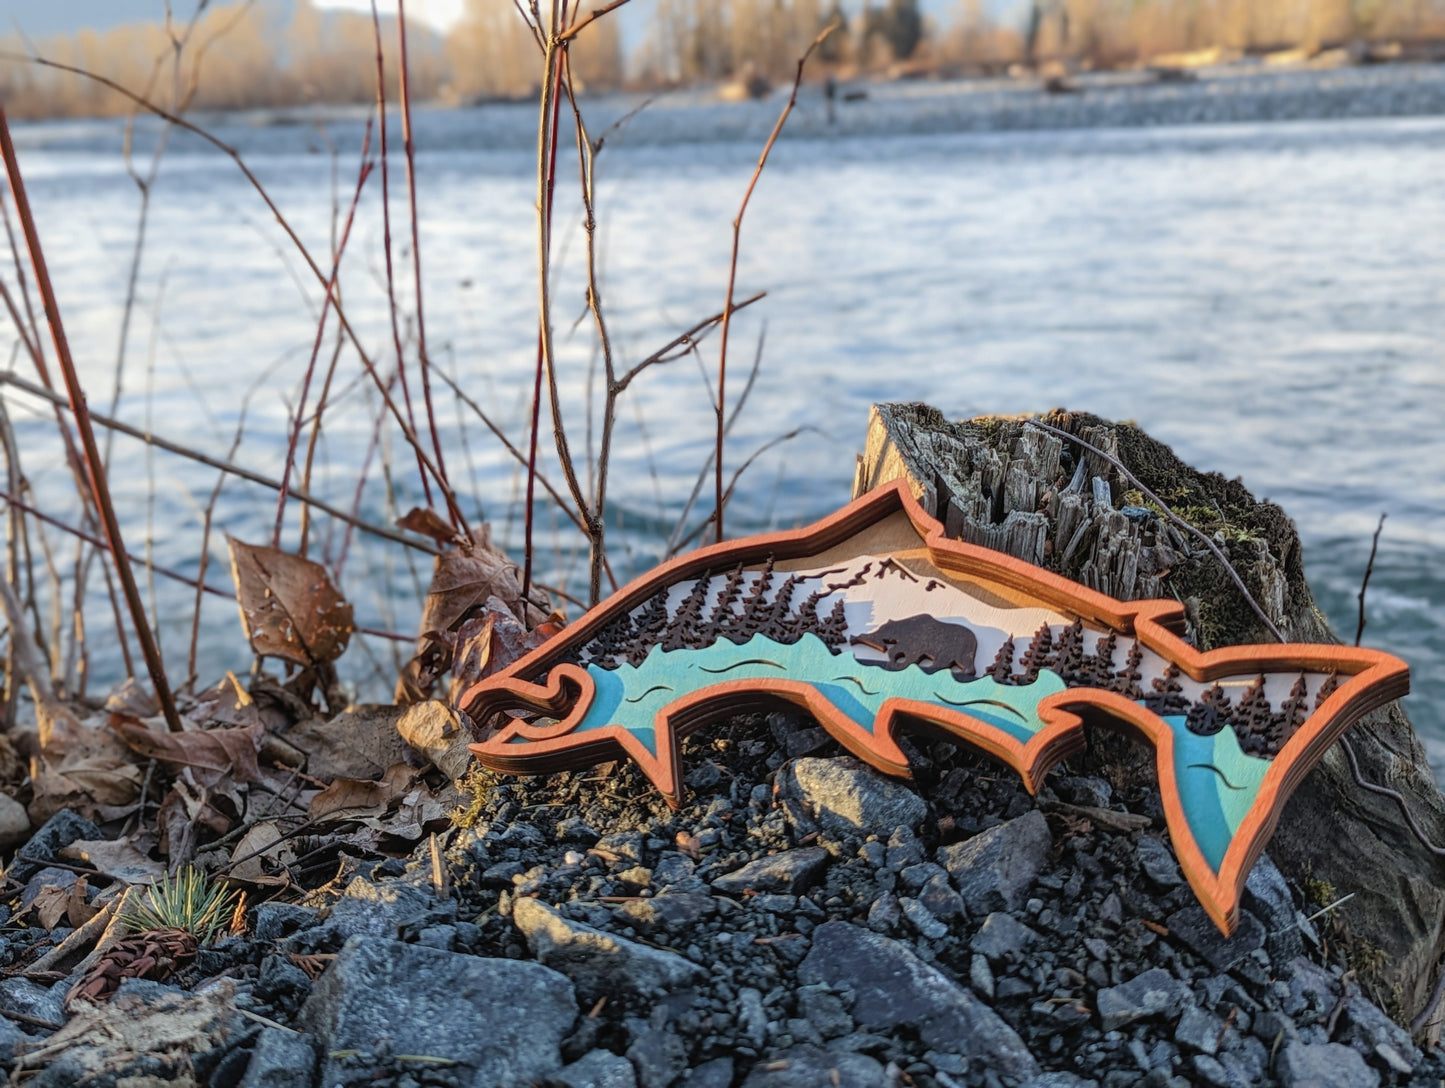 3D Layered Wooden Salmon Art / Salmon shaped layered mountain river scene